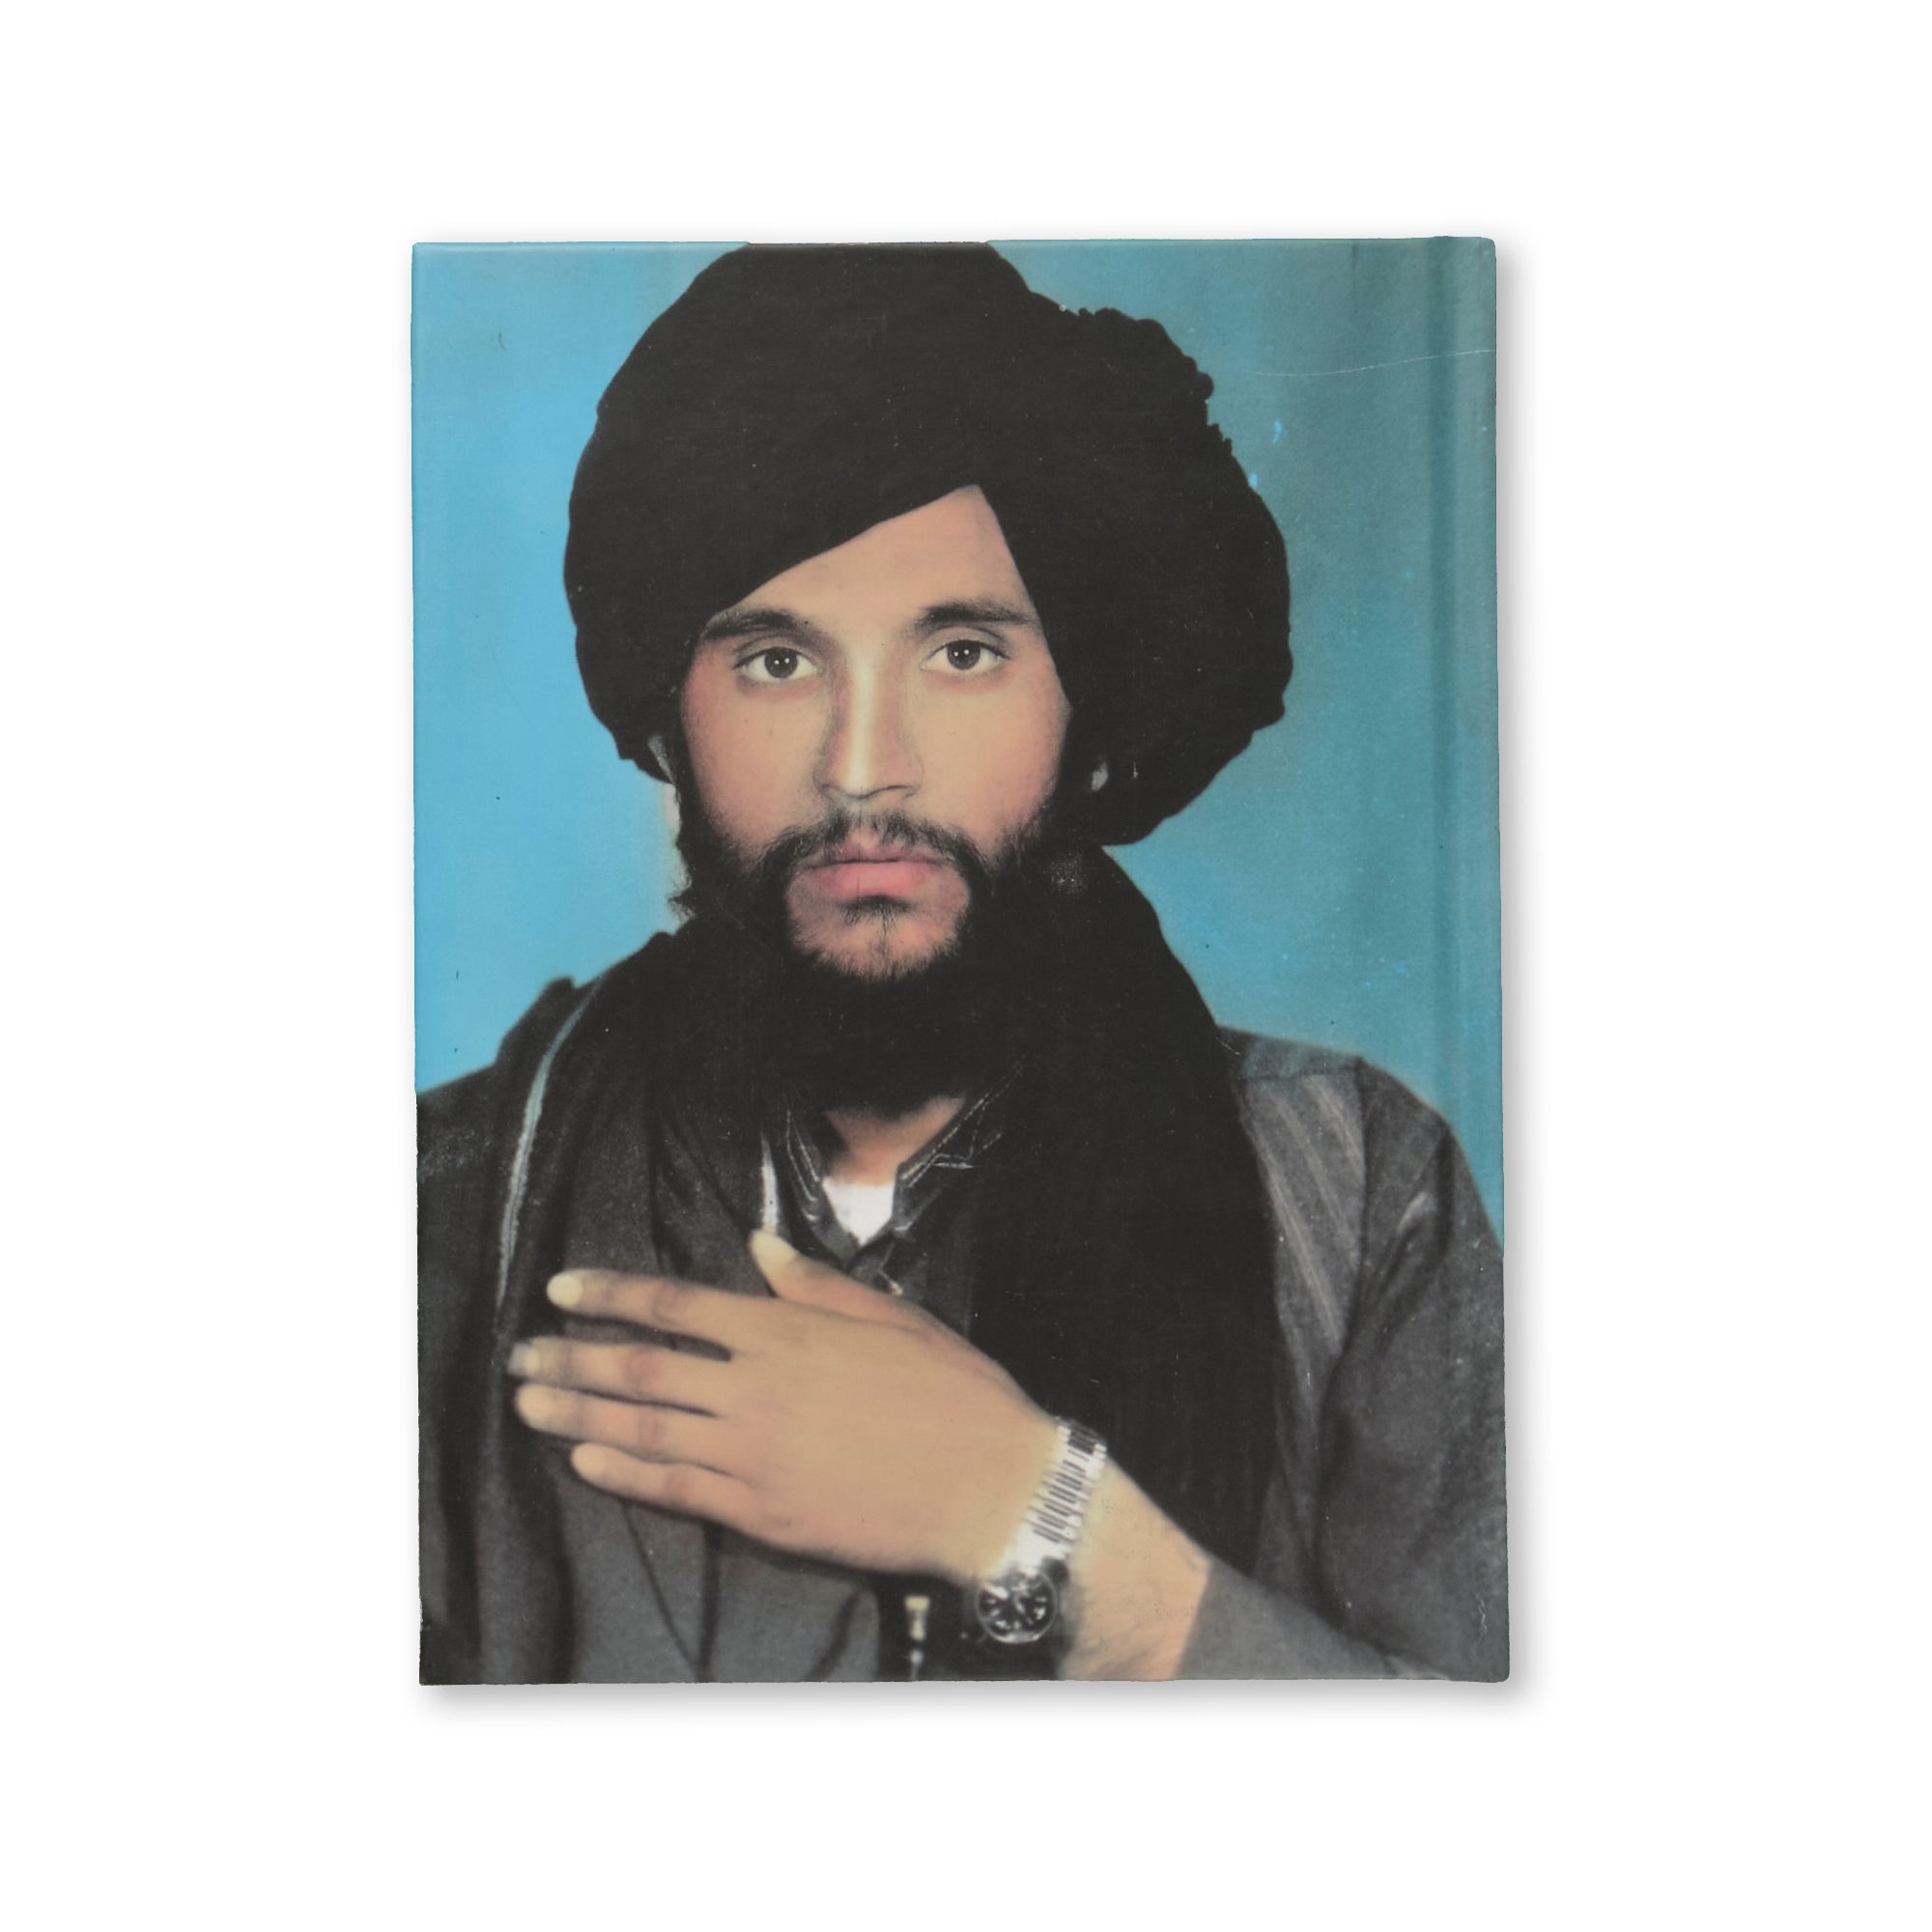 Thomas Dworzak - Taliban